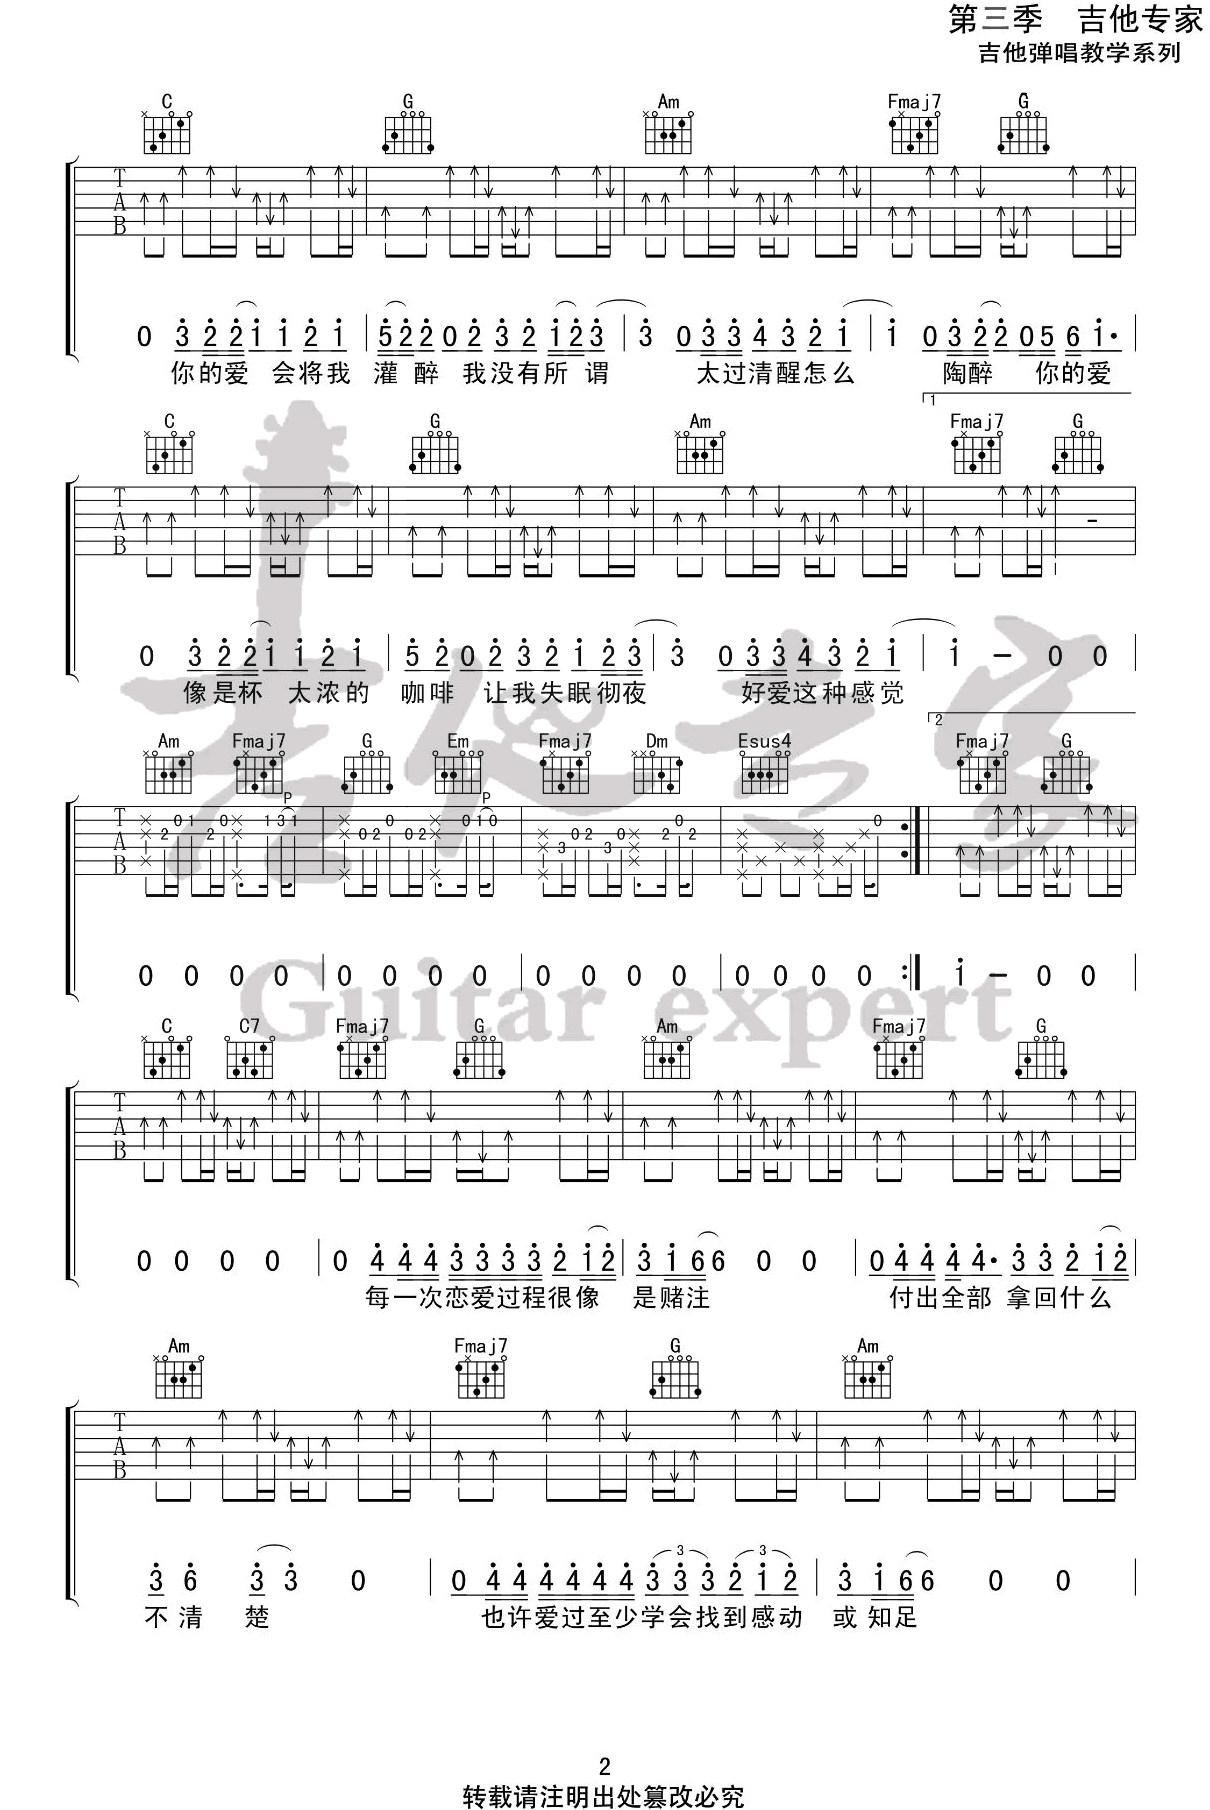 DearJohn吉他谱,原版歌曲,简单C调弹唱教学,六线谱指弹简谱3张图